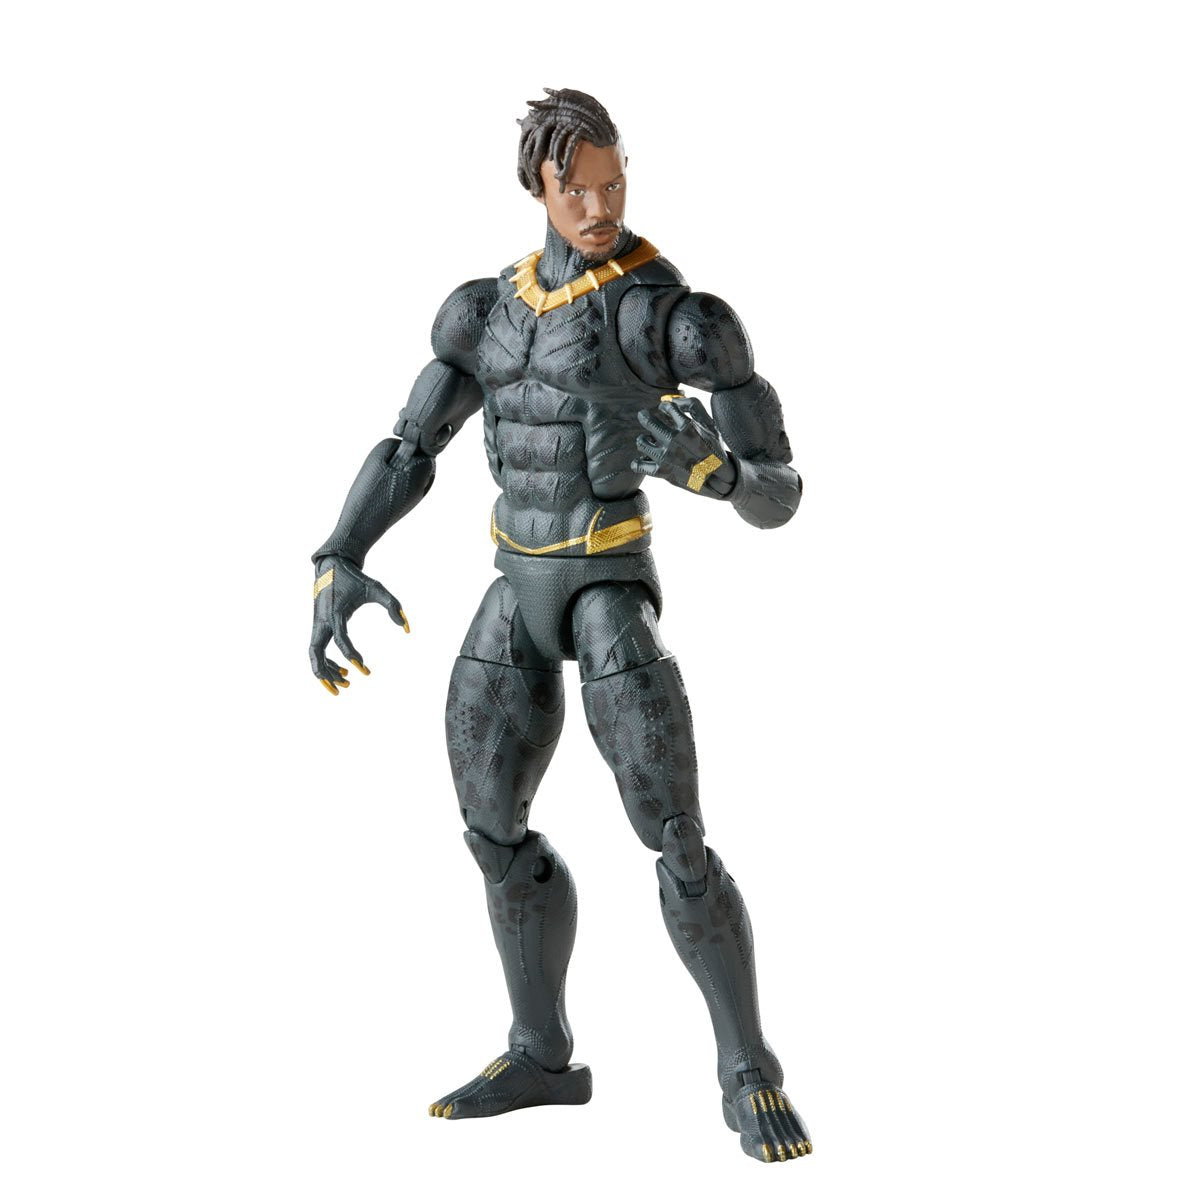 Marvel Legends Legacy Collection Erik Killmonger Action Figure